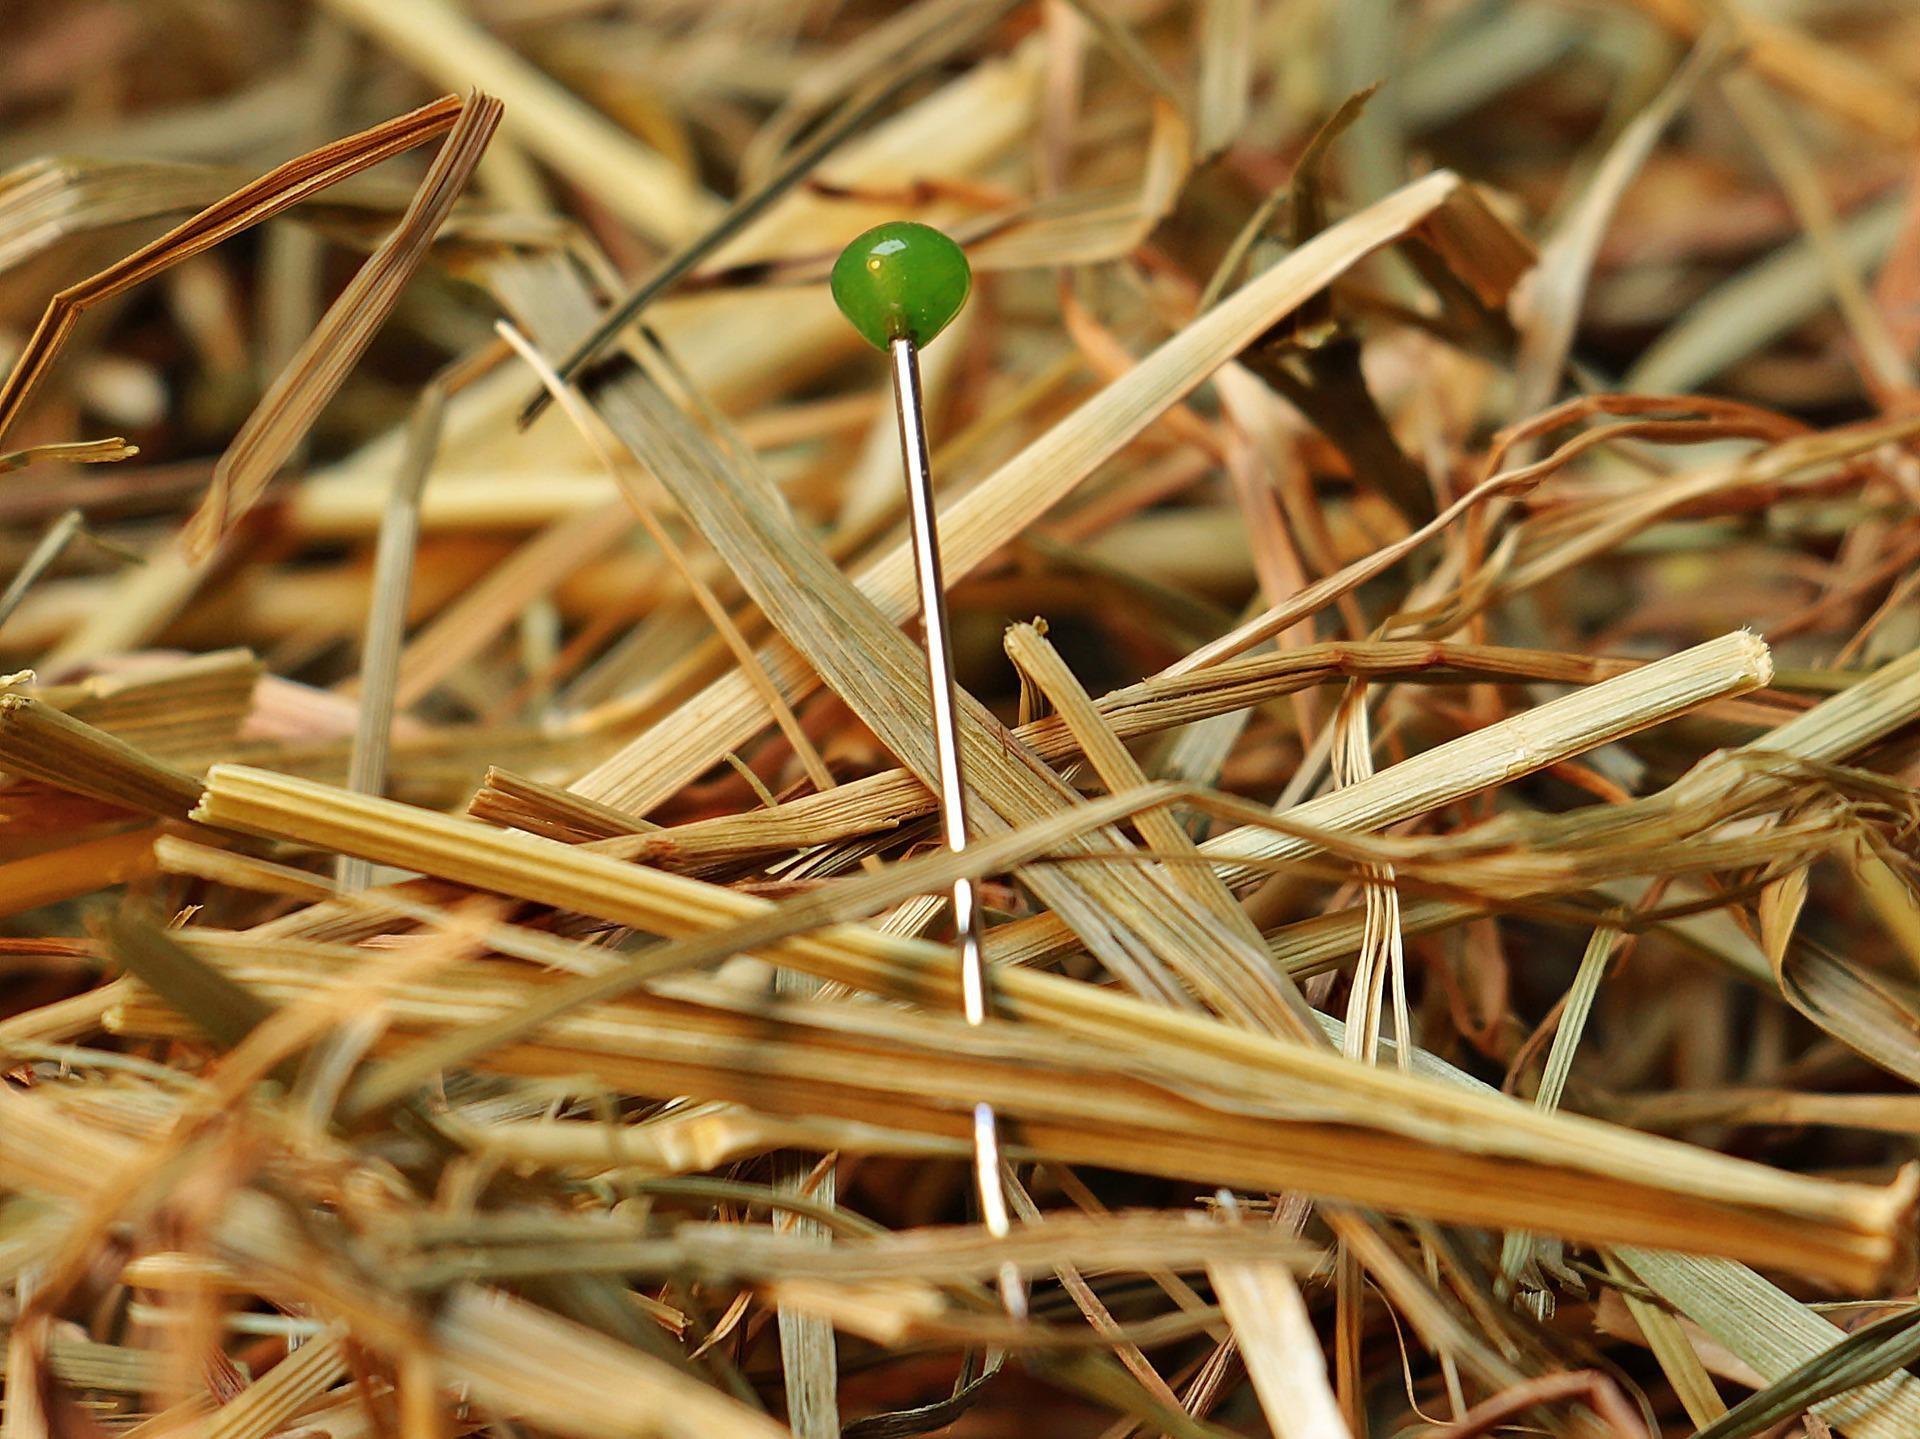 needle in the haystack